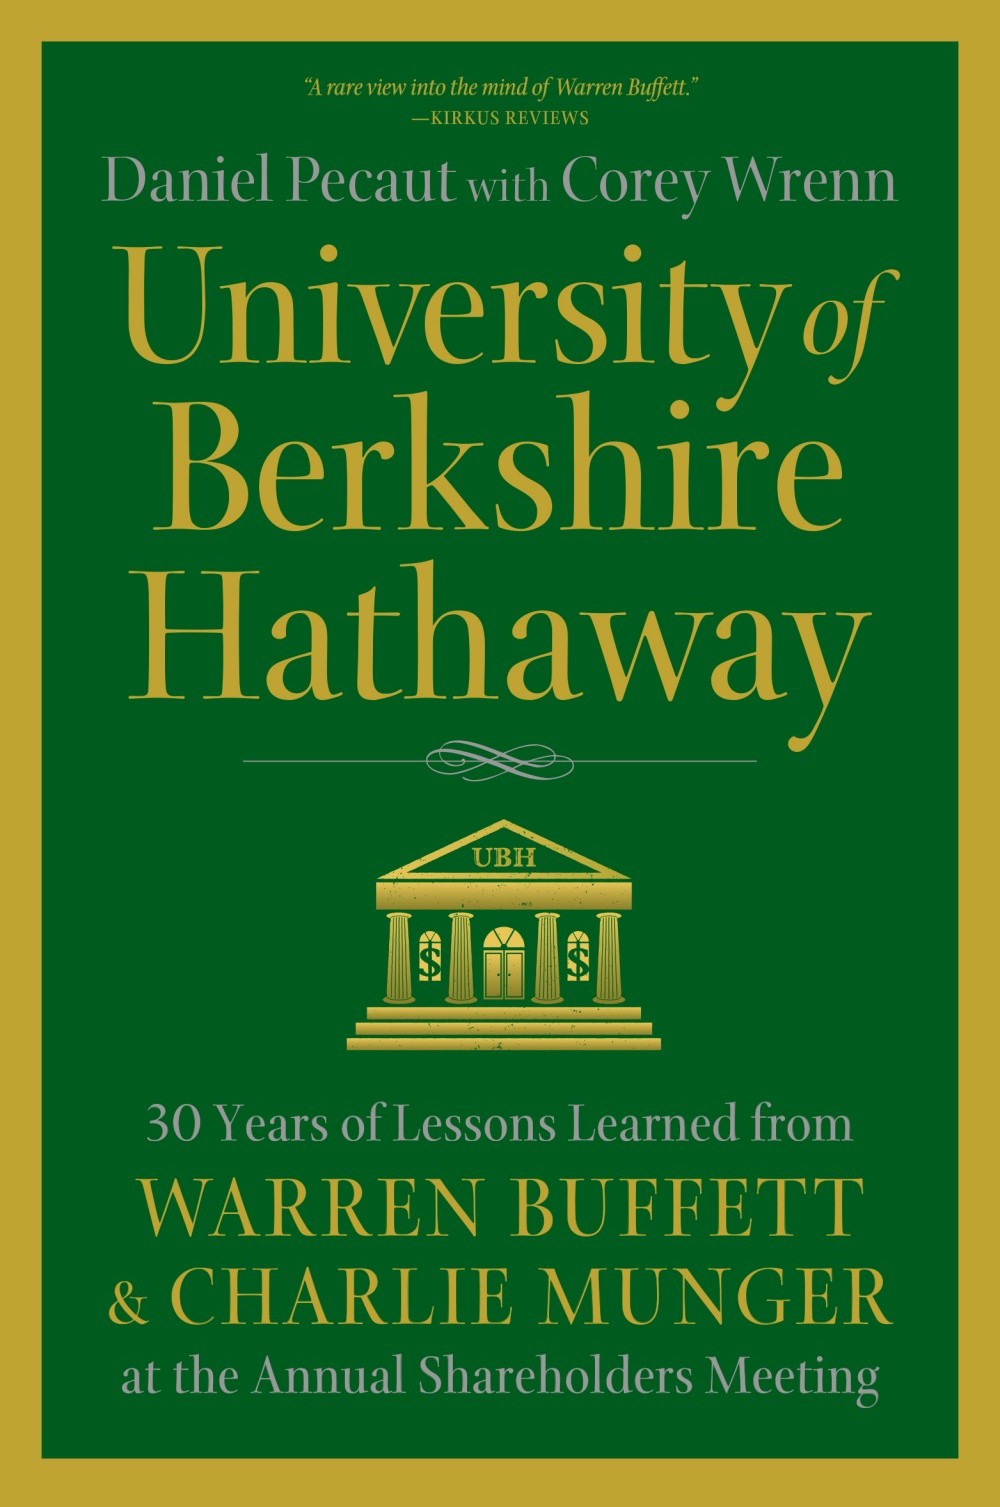 FREE: University of Berkshire Hathaway by Daniel Pecaut